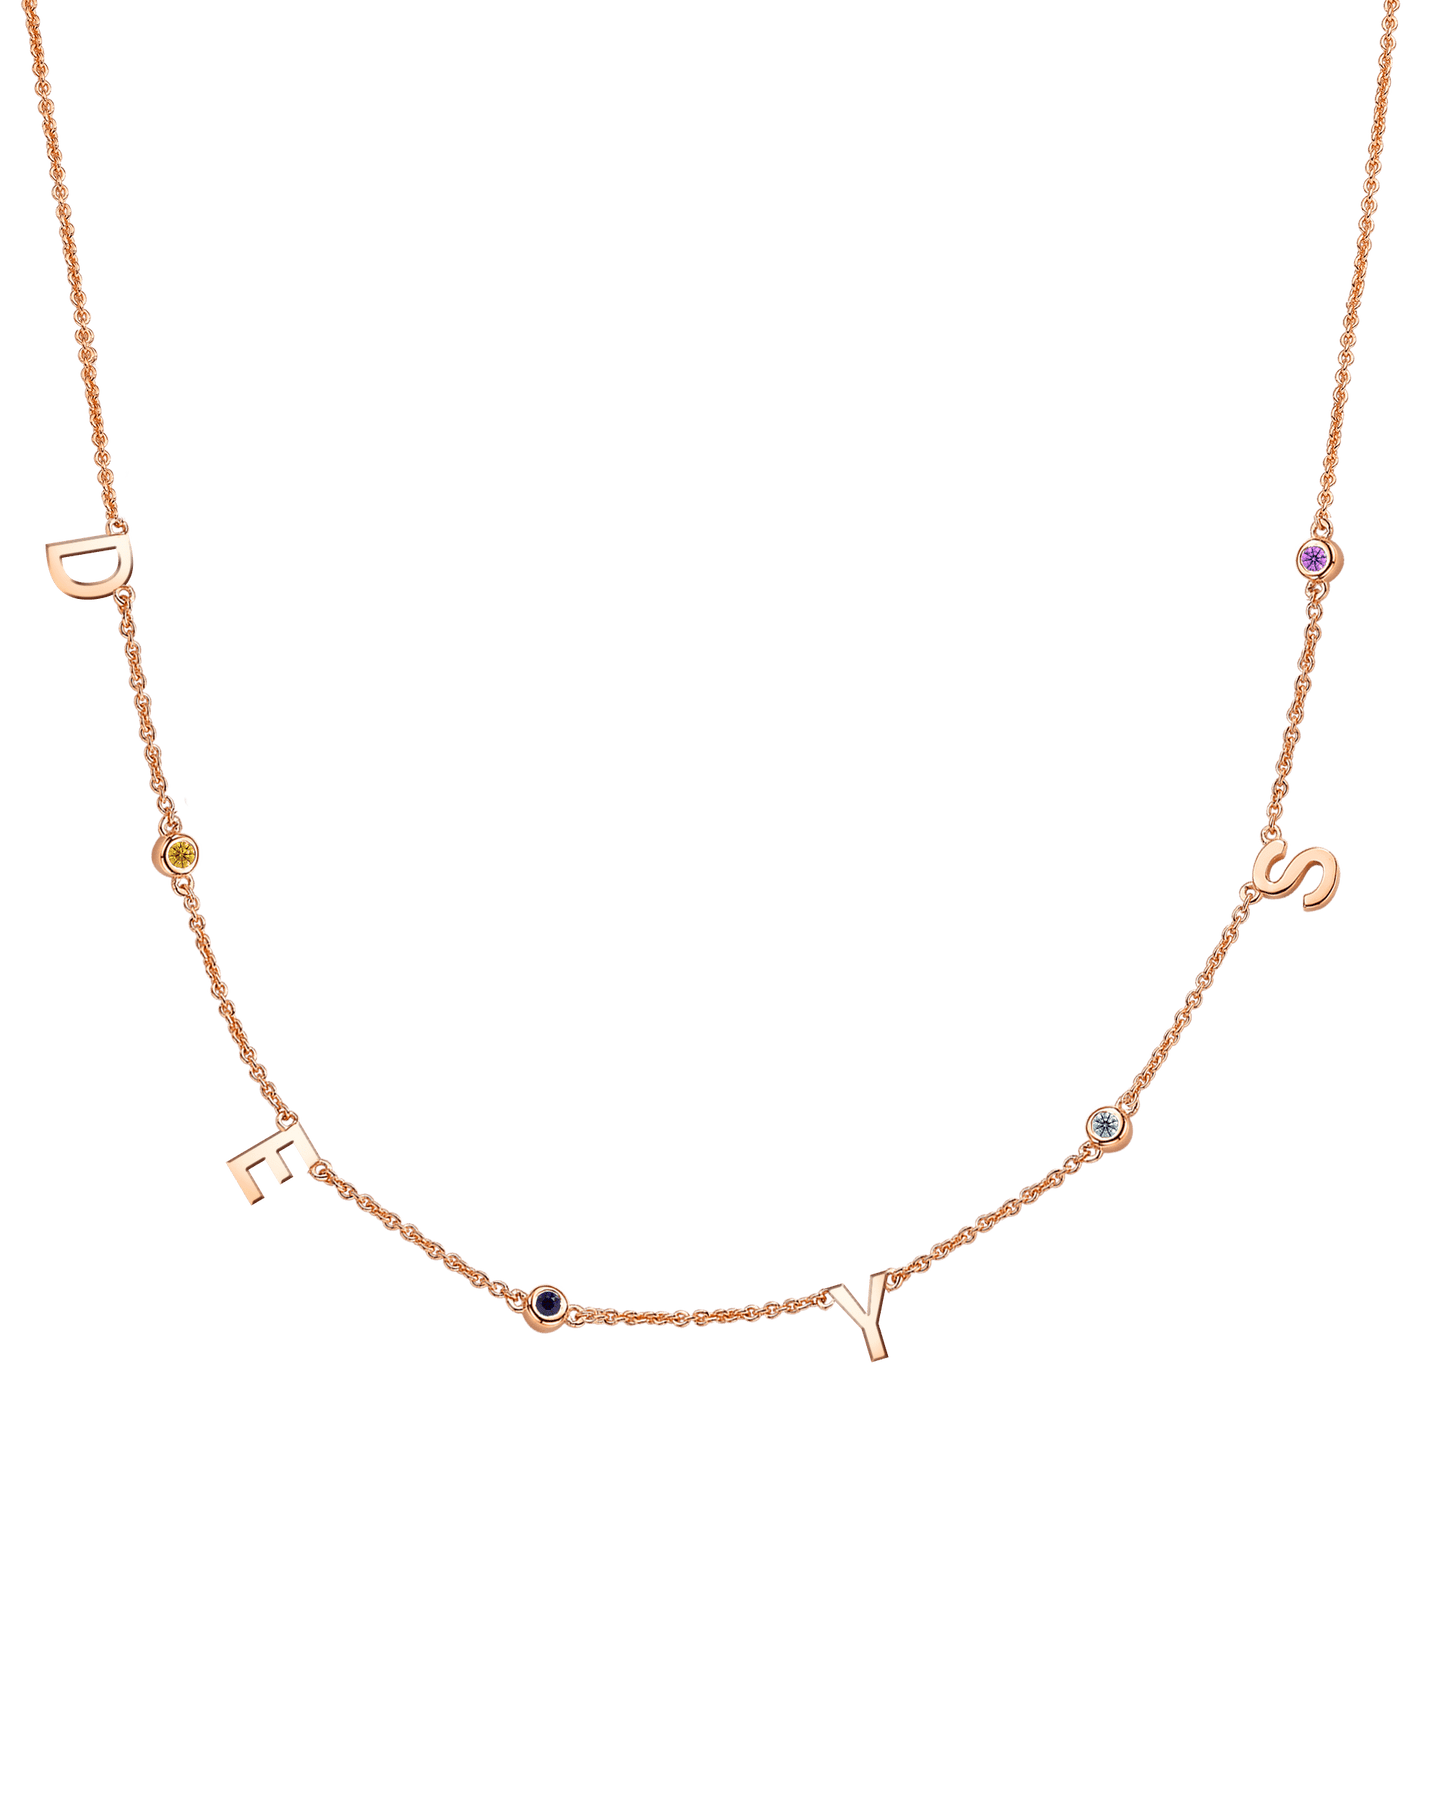 Initial Birthstone Necklace - 18K Rose Vermeil Necklaces magal-dev 4 Initials + 4 Birthstones Adjustable 16-17" (40cm-43cm) 